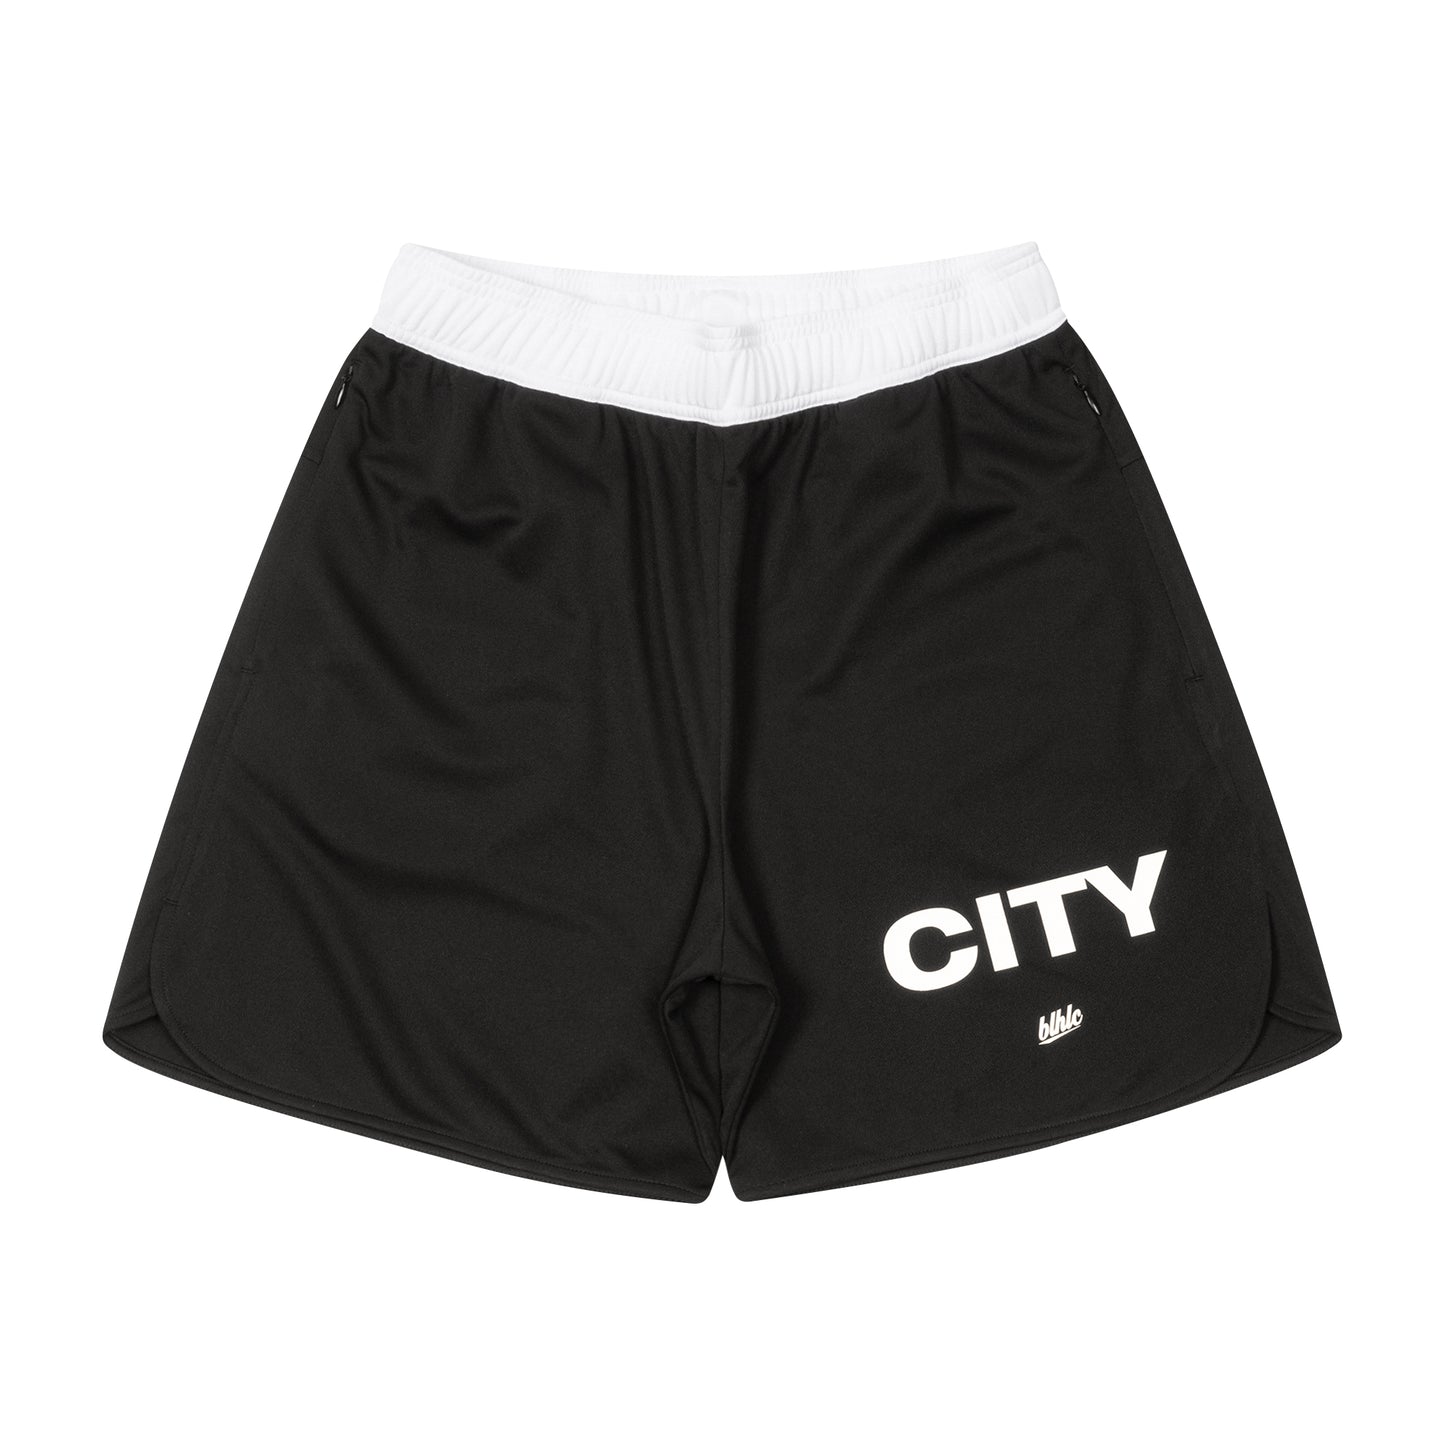 MY CITY Zip Shorts (black)